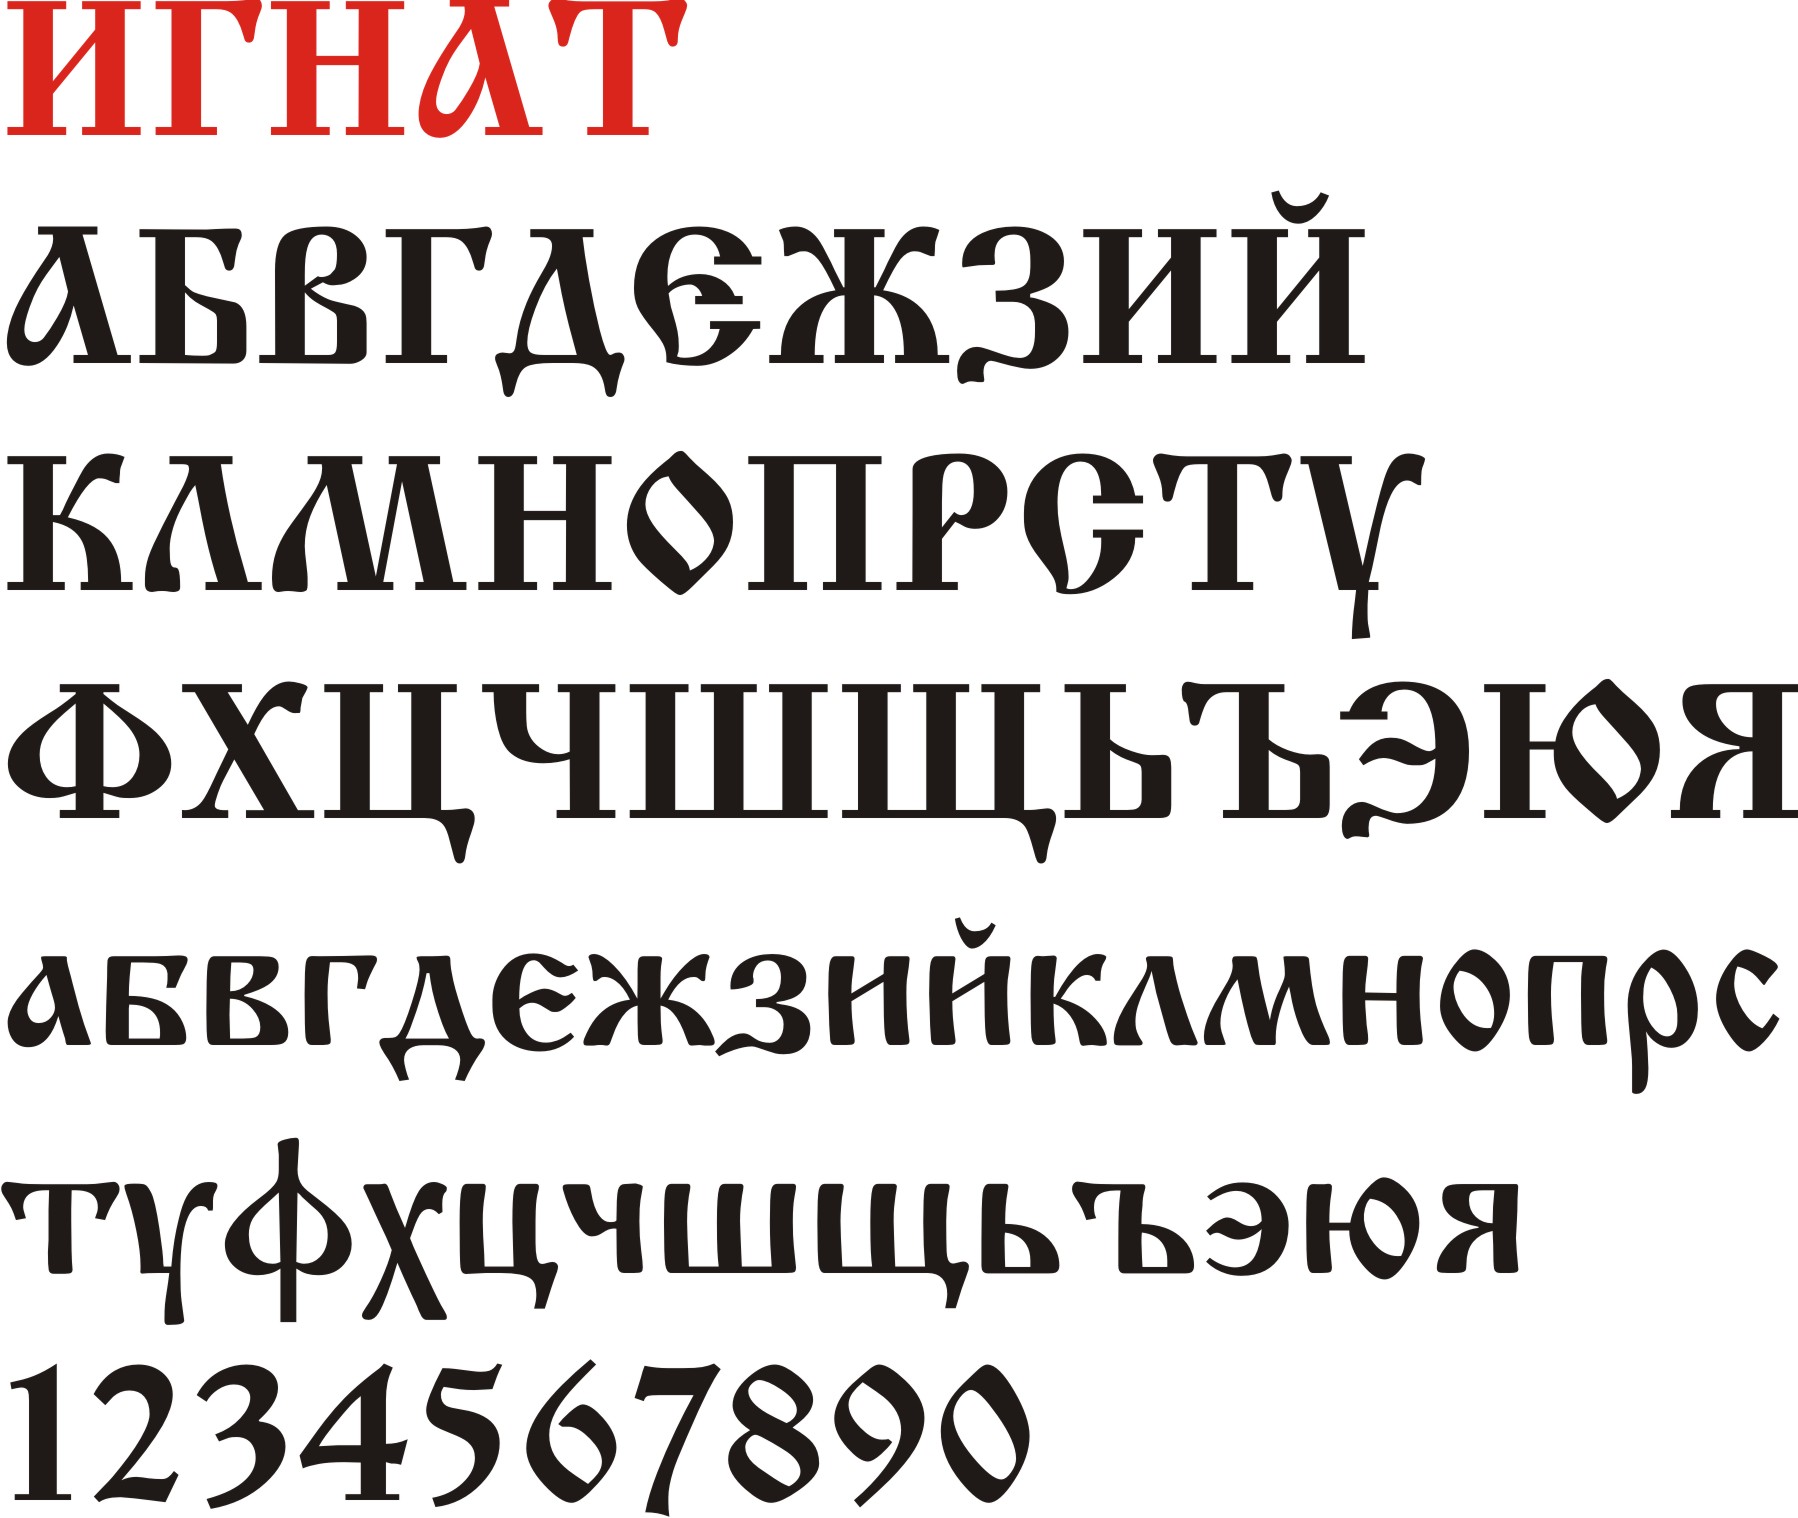 Шрифт для телеграмма красивый на русском фото 104